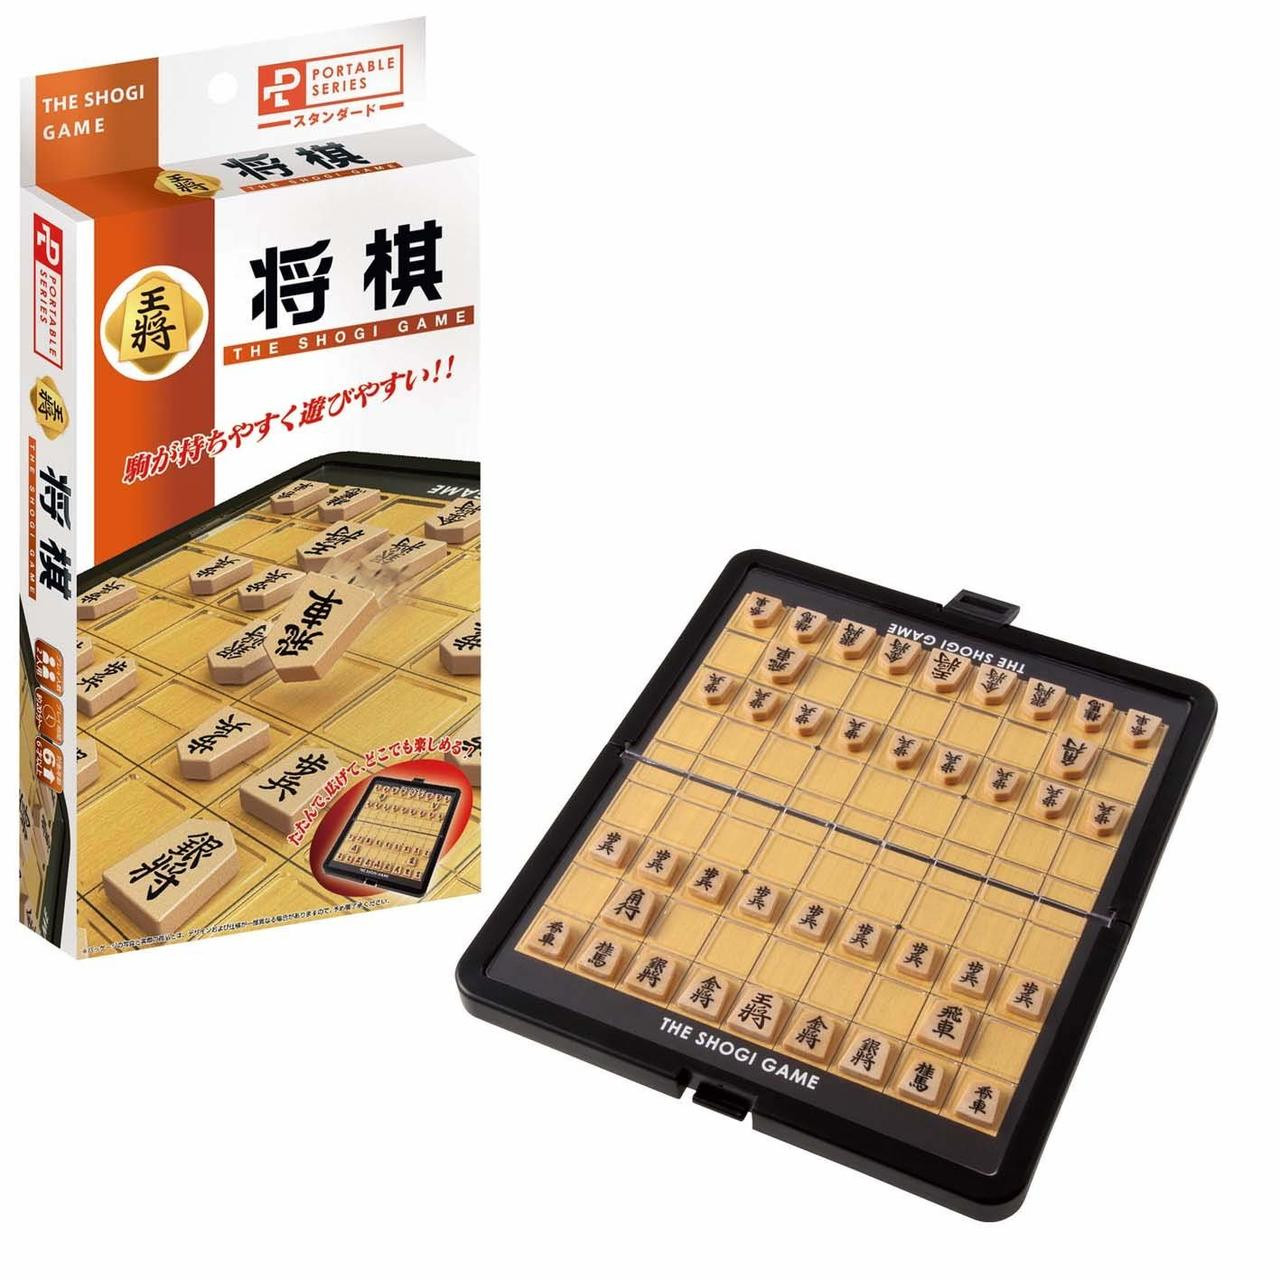 Igo Hanayama Go Game Board Portable Standard From Japan 